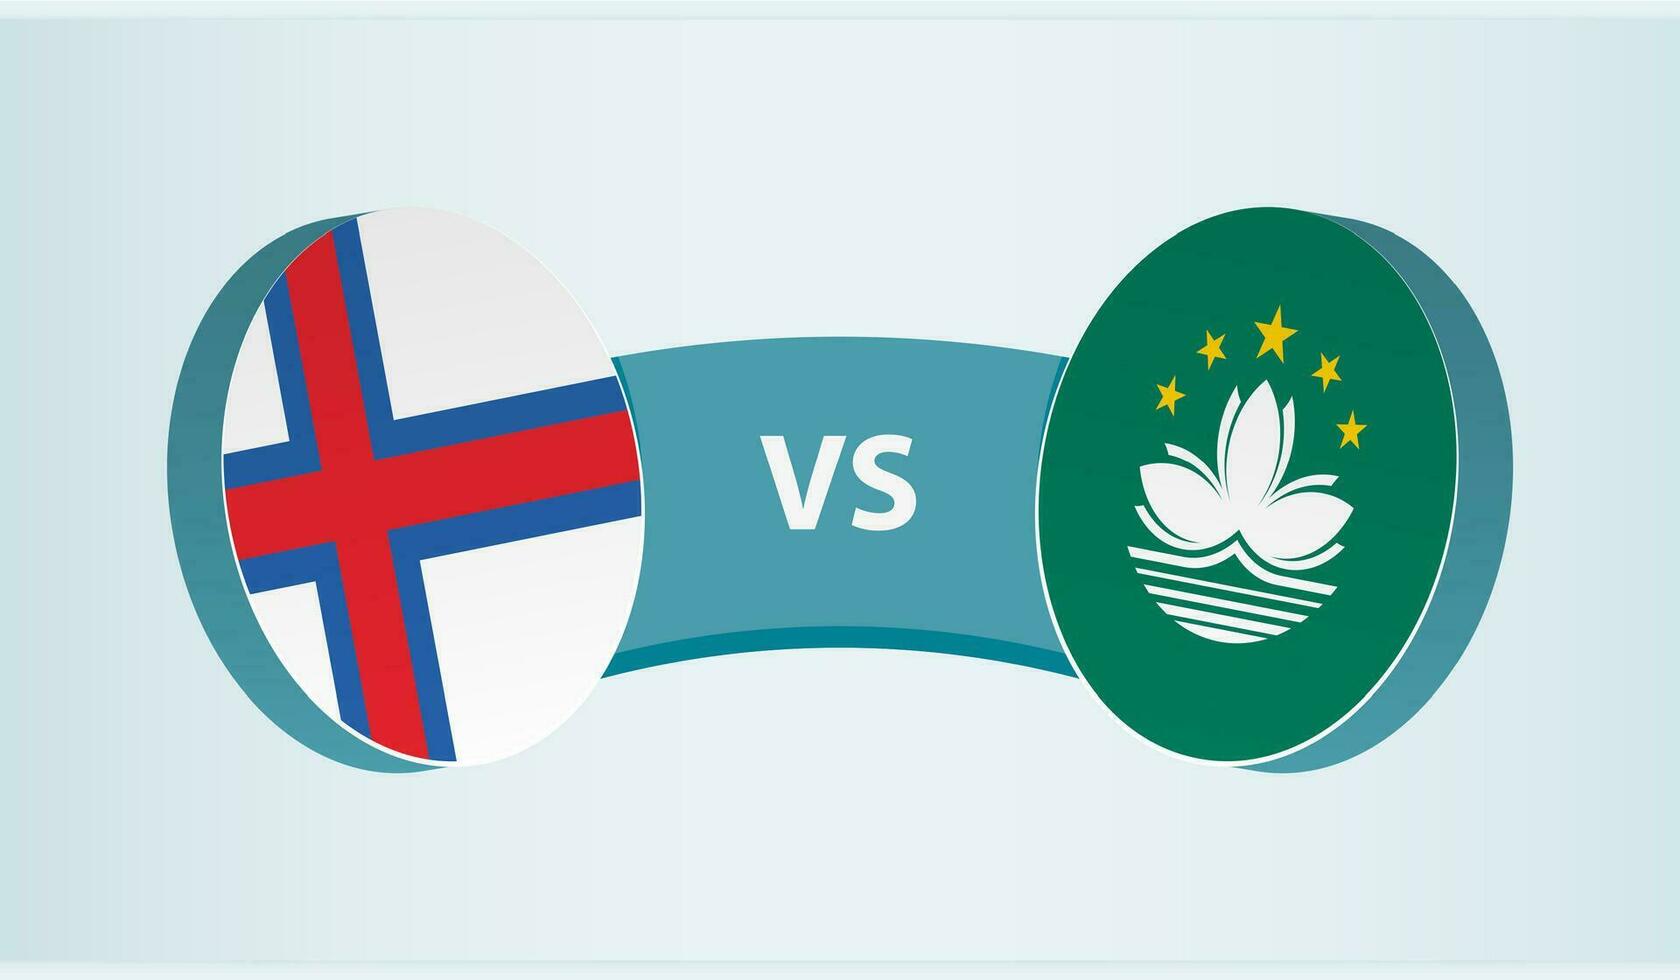 Faroe Islands versus Macau, team sports competition concept. vector